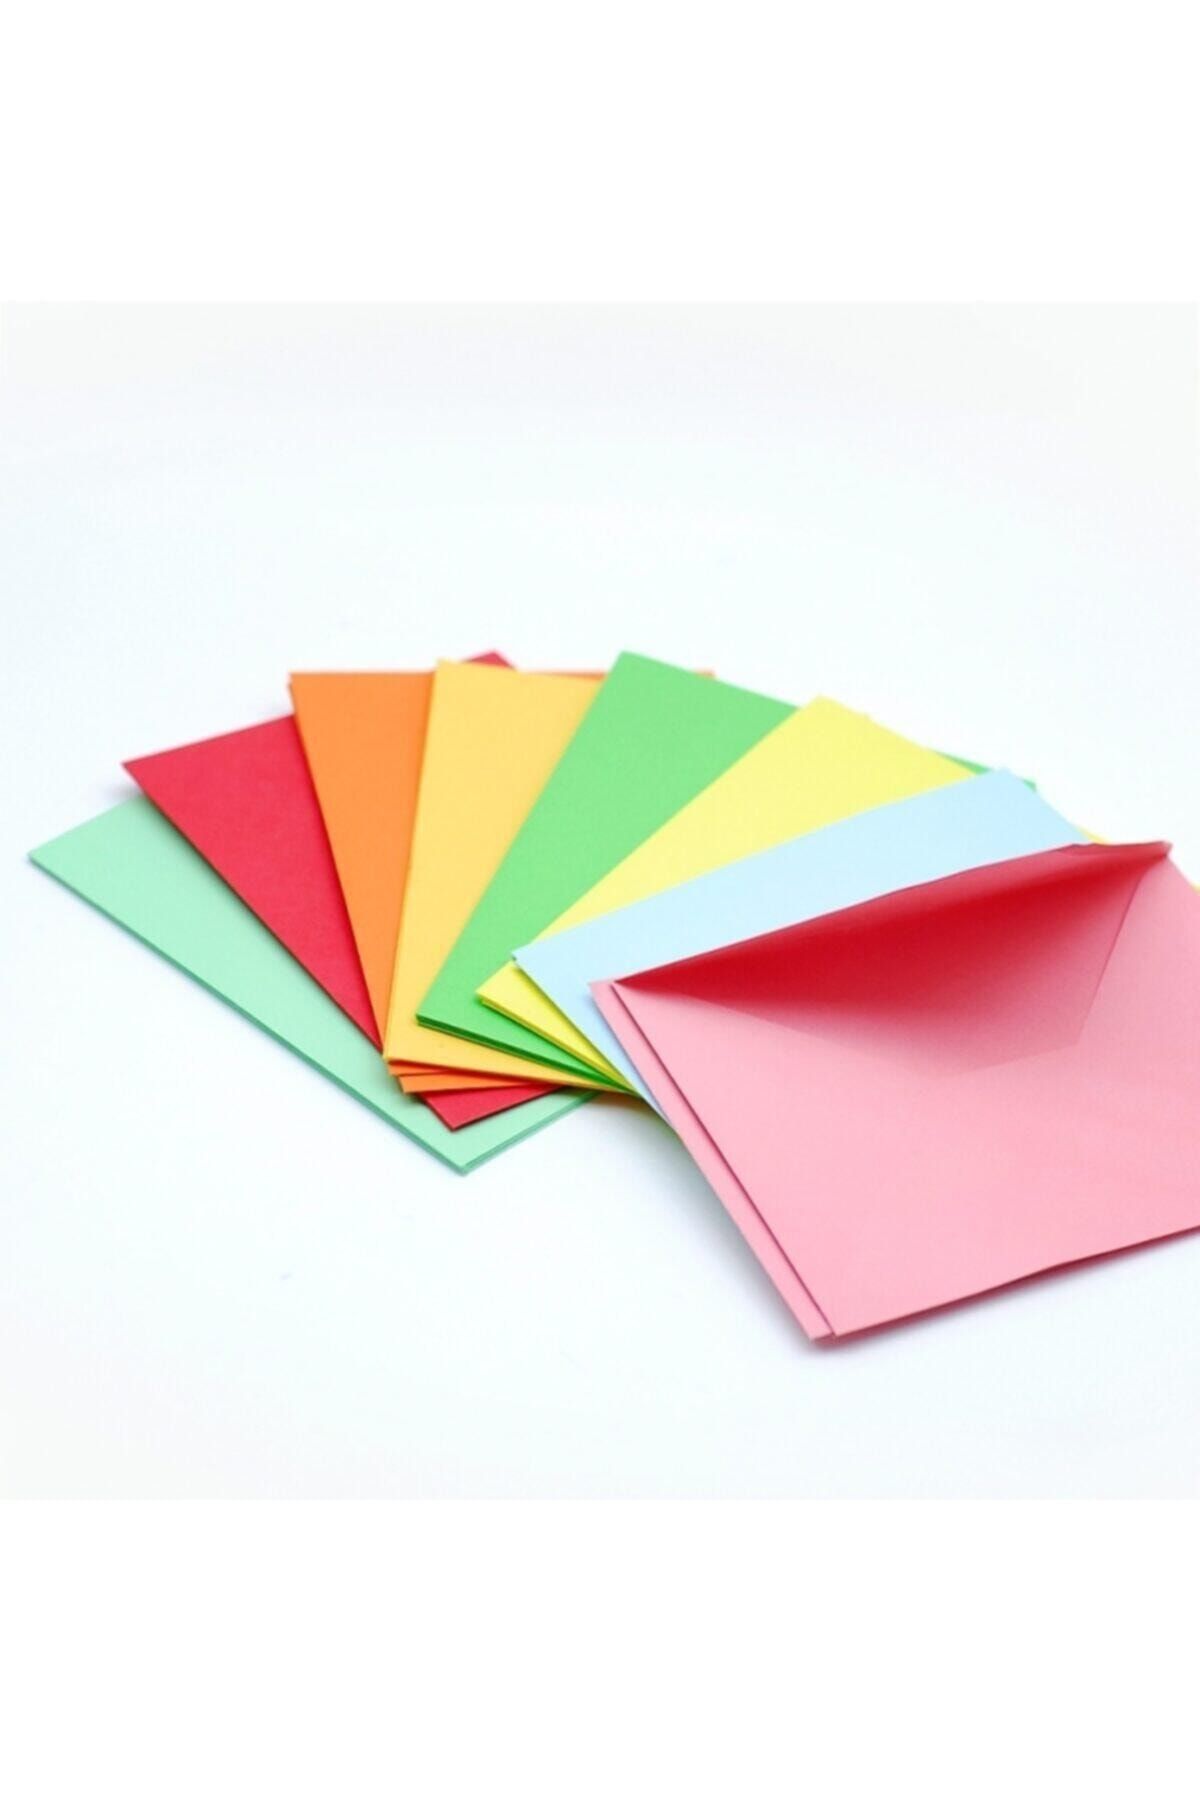 Limmy 10 Renk Mektup Zarfı Renkli 7x9 Cm 90 gr 1.hamur -20 Adet